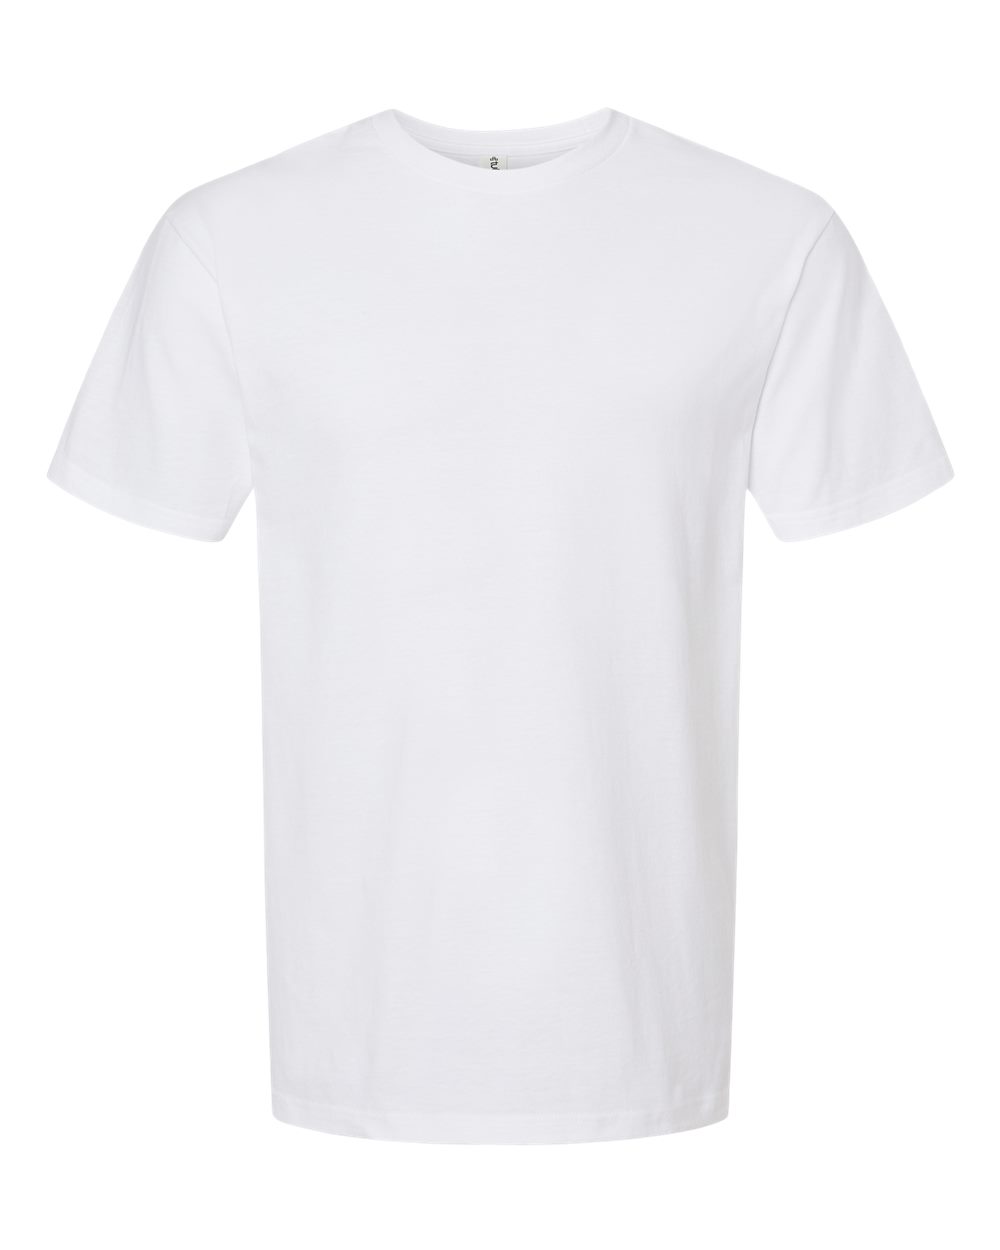 mens tshirts Unisex Jersey T-Shirt